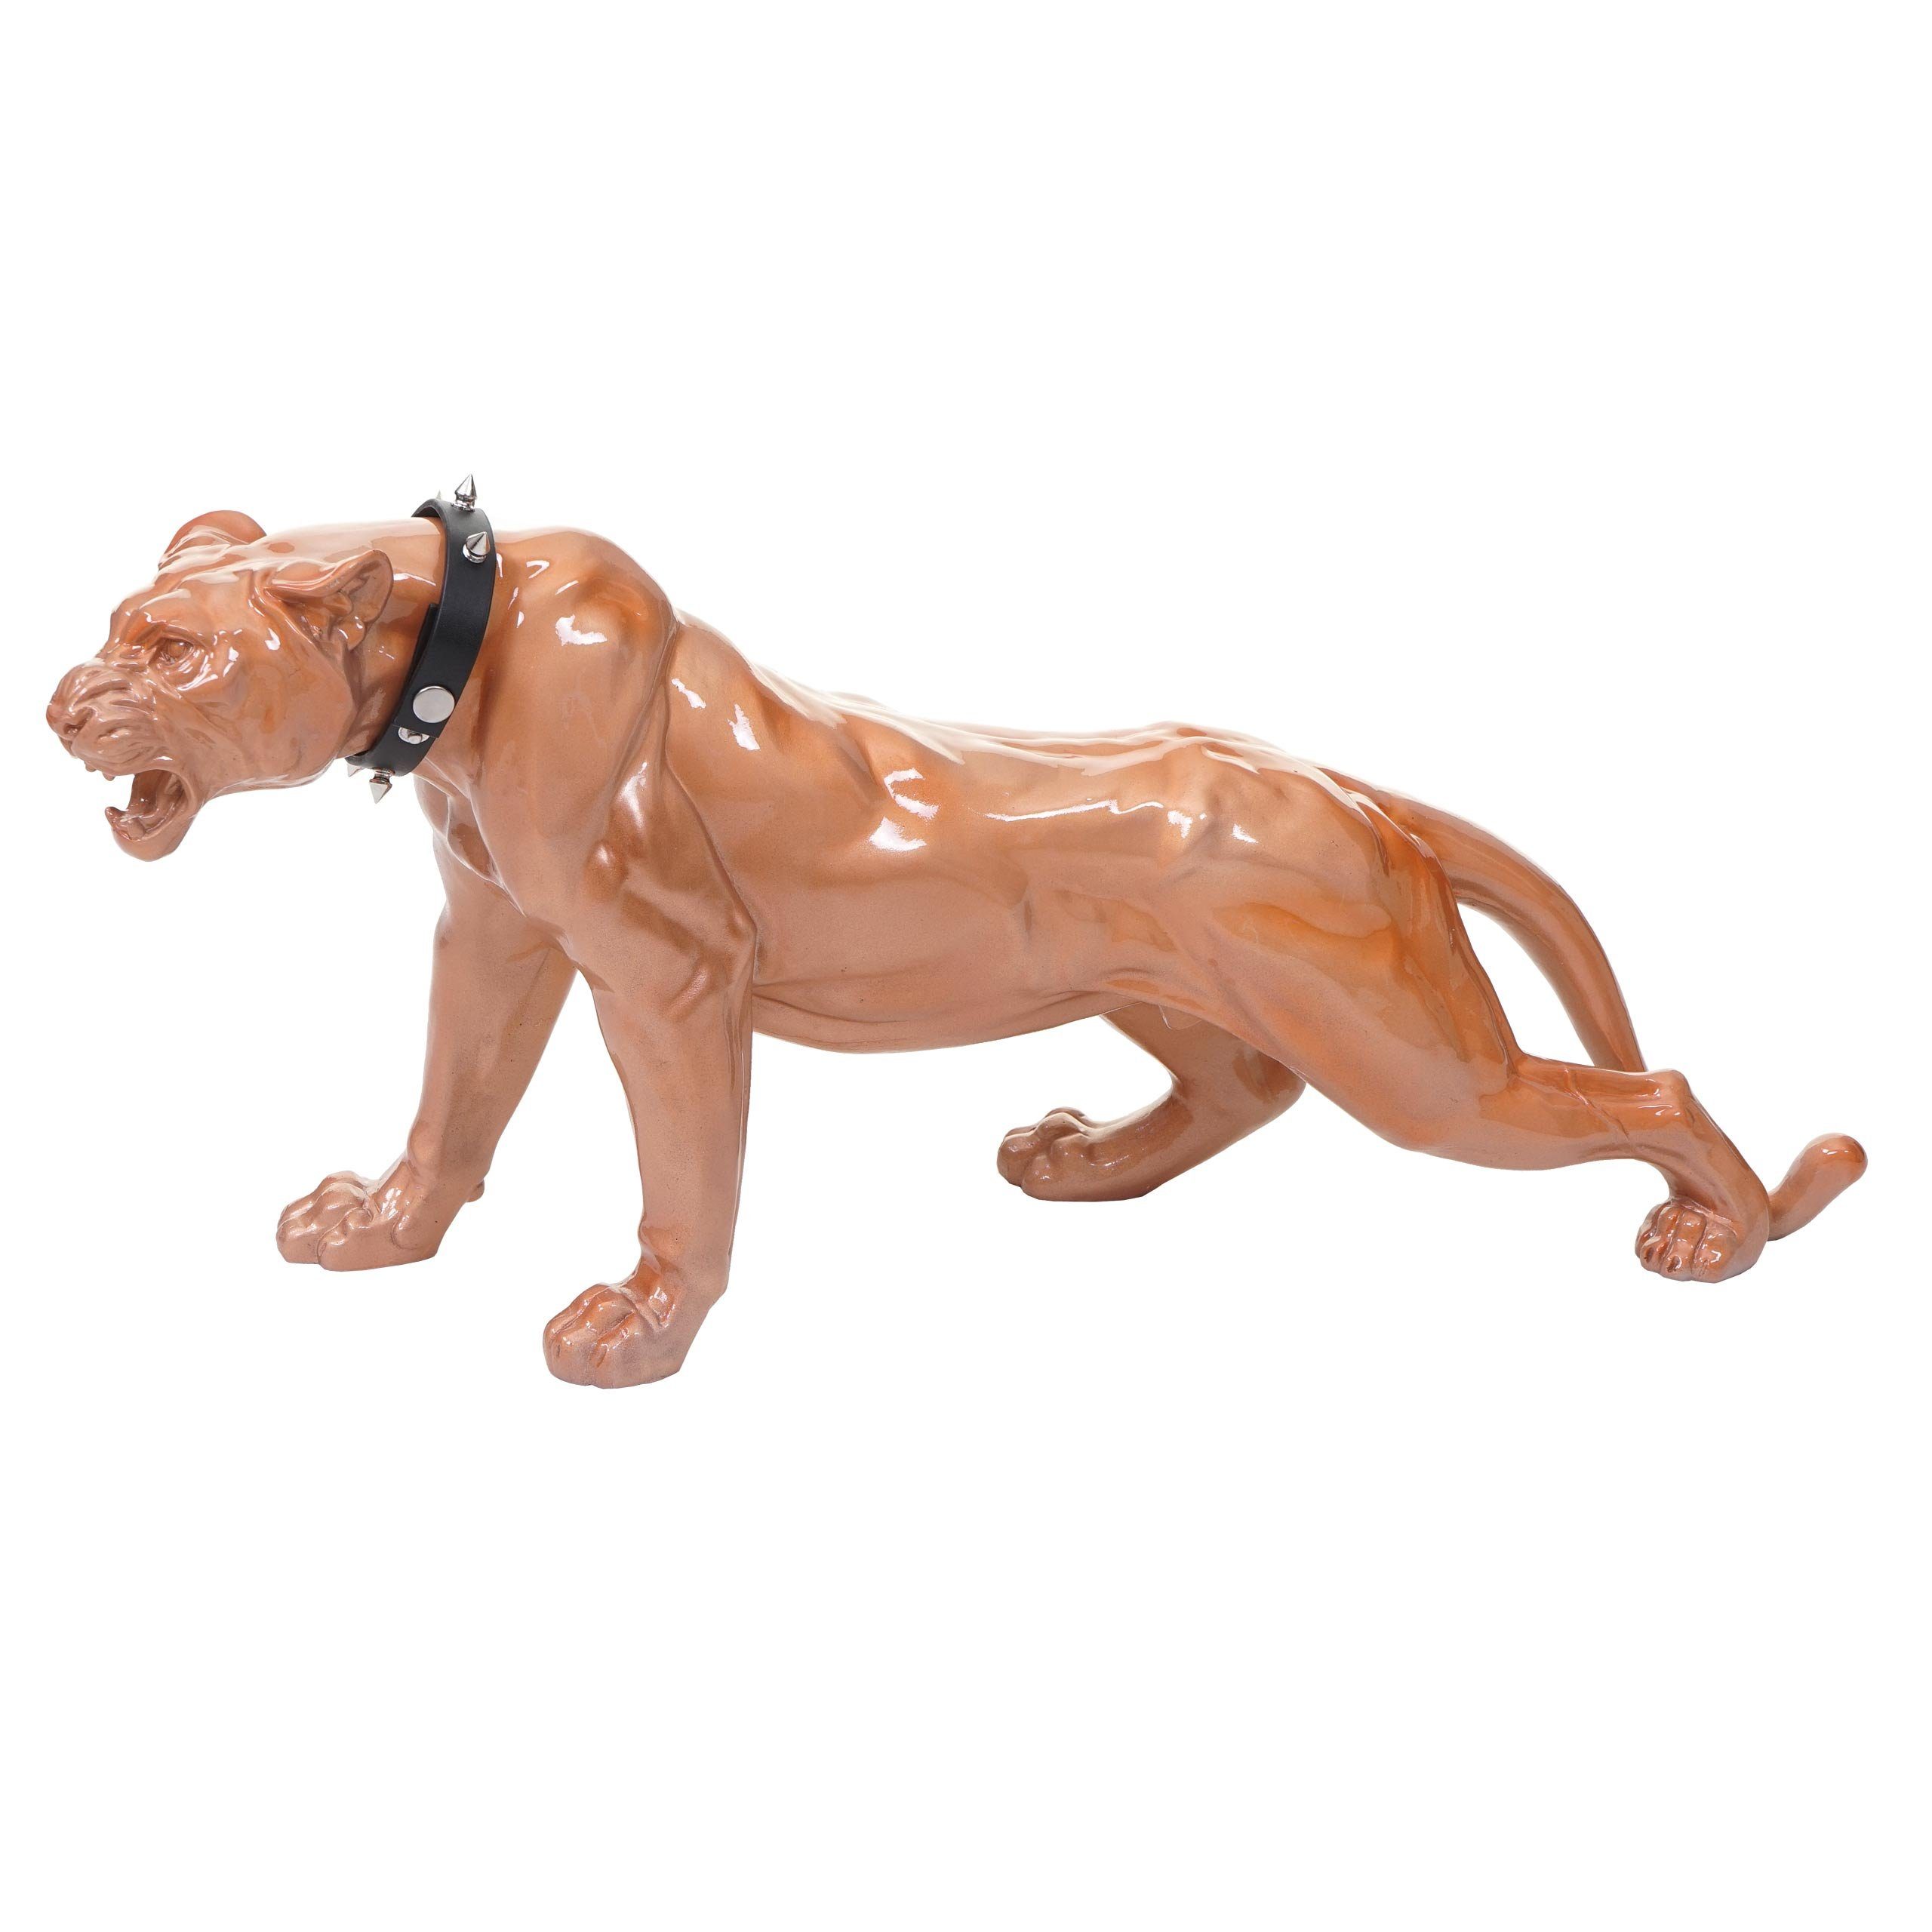 Tierfigur Witterungsbeständig, -10° C, Inkl. Panther, bis Frostbeständig antik Halsband MCW Indoor/Outdoor-geeignet,